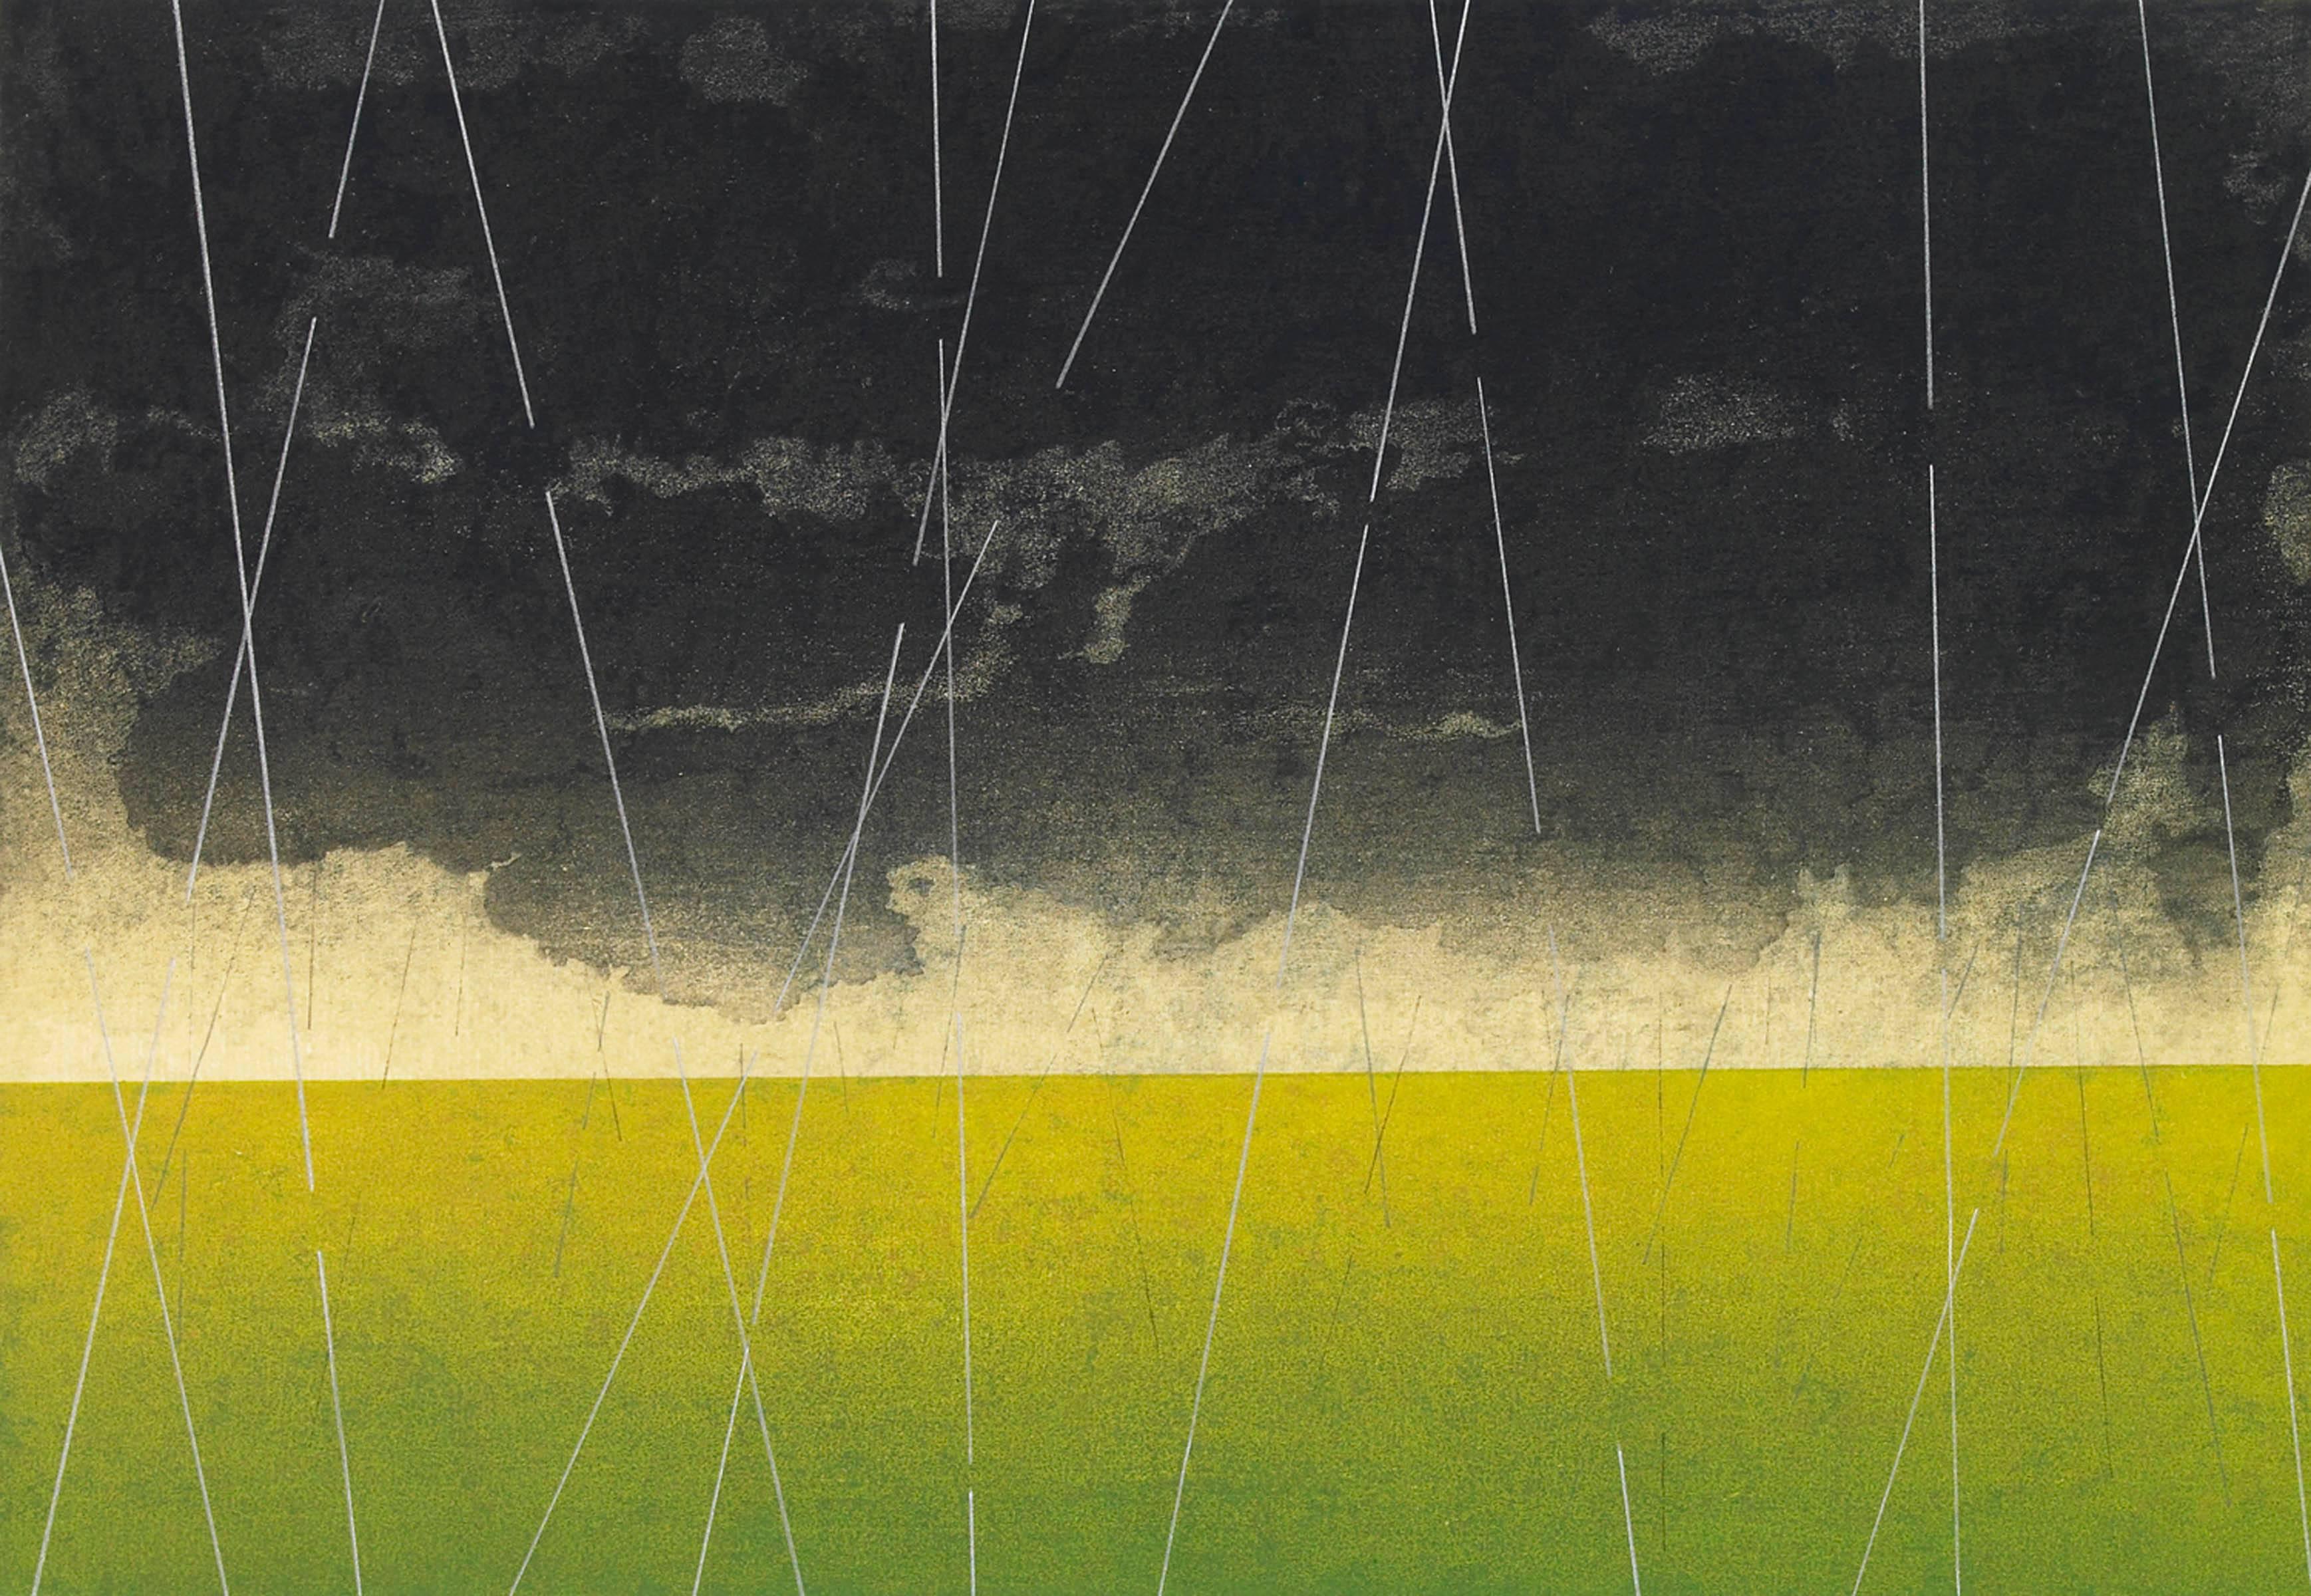 Keiji Shinohara, Accelerondo, Ukiyo-e woodcut print landscape, 2005